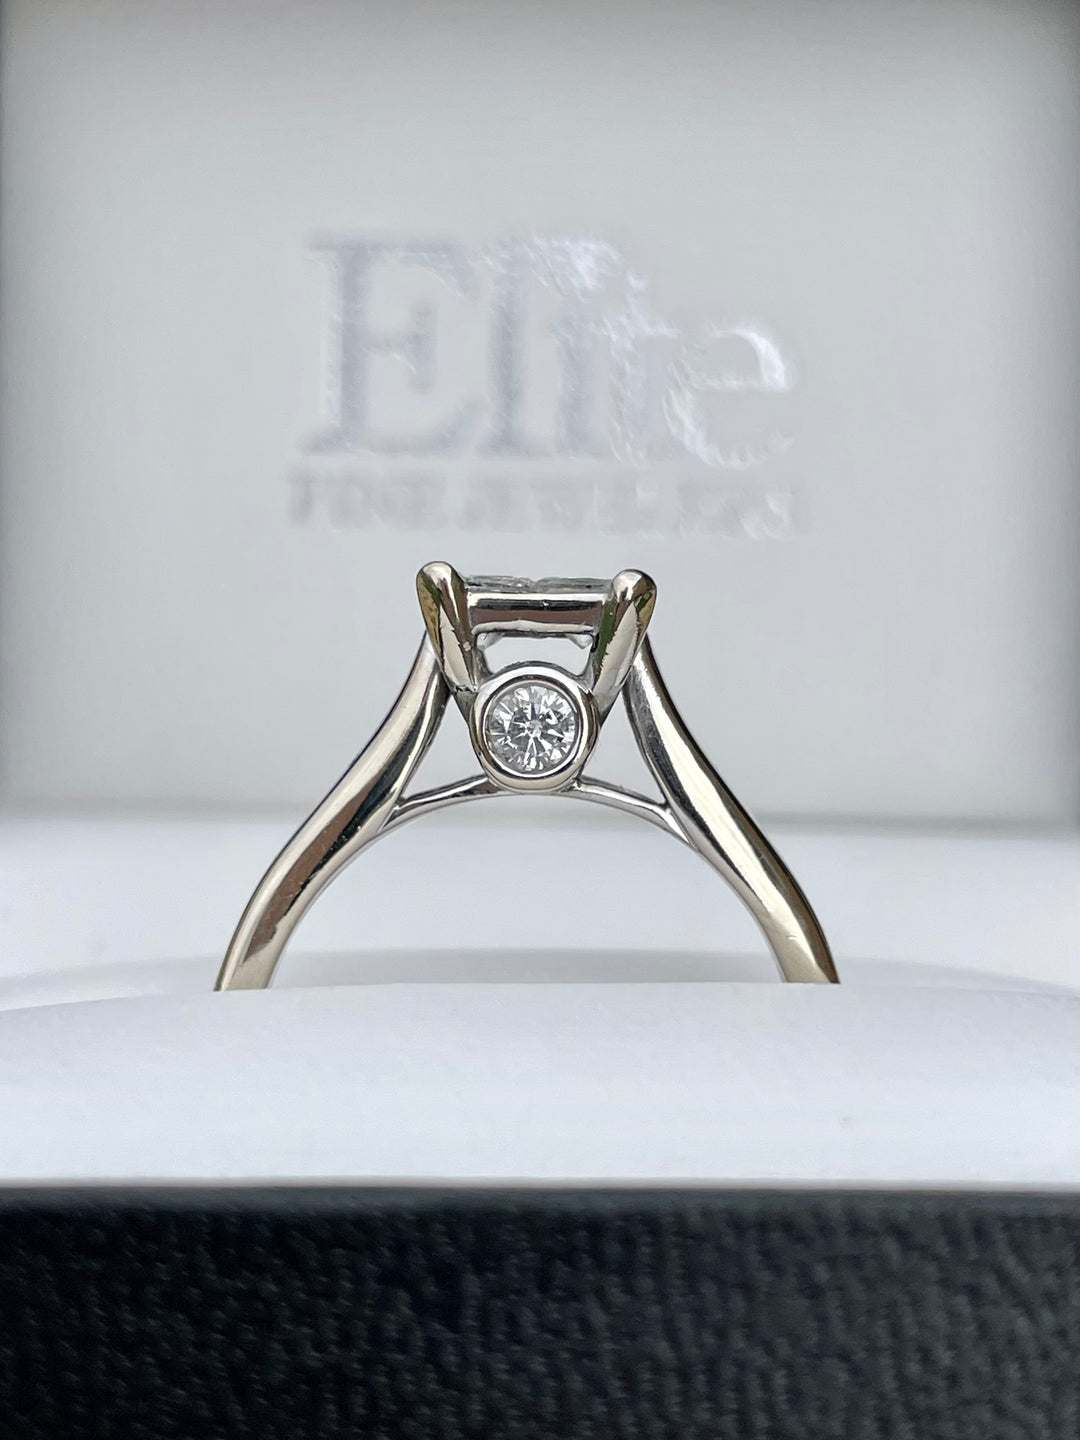 14k Yellow Gold Quad Princess Cut Diamond Engagement Ring